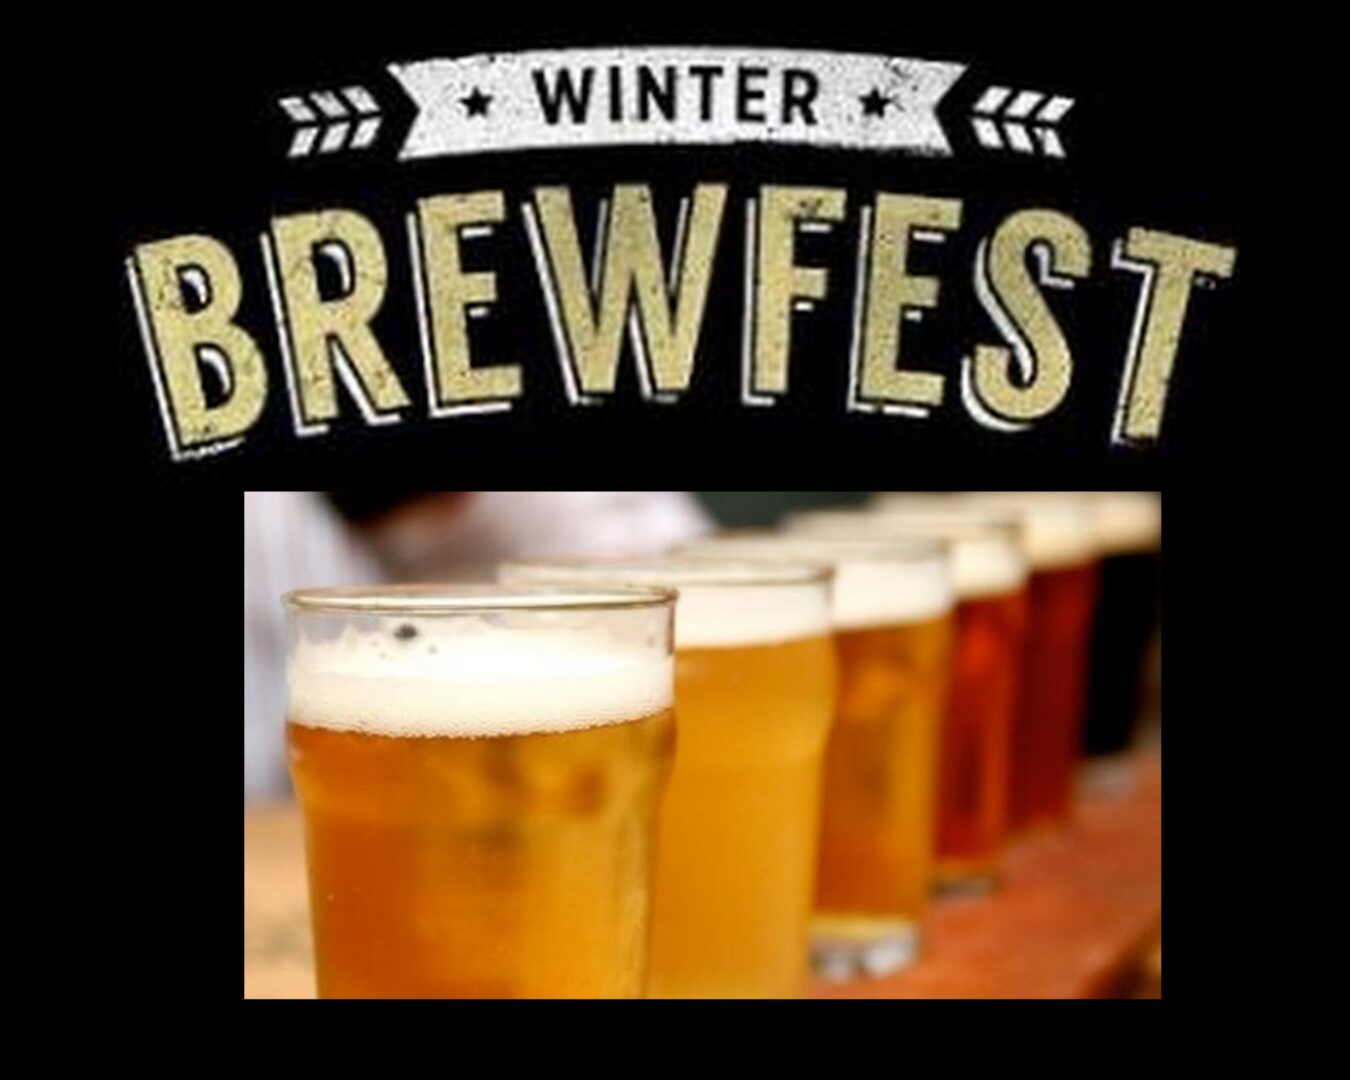 Winter brewfest logo.